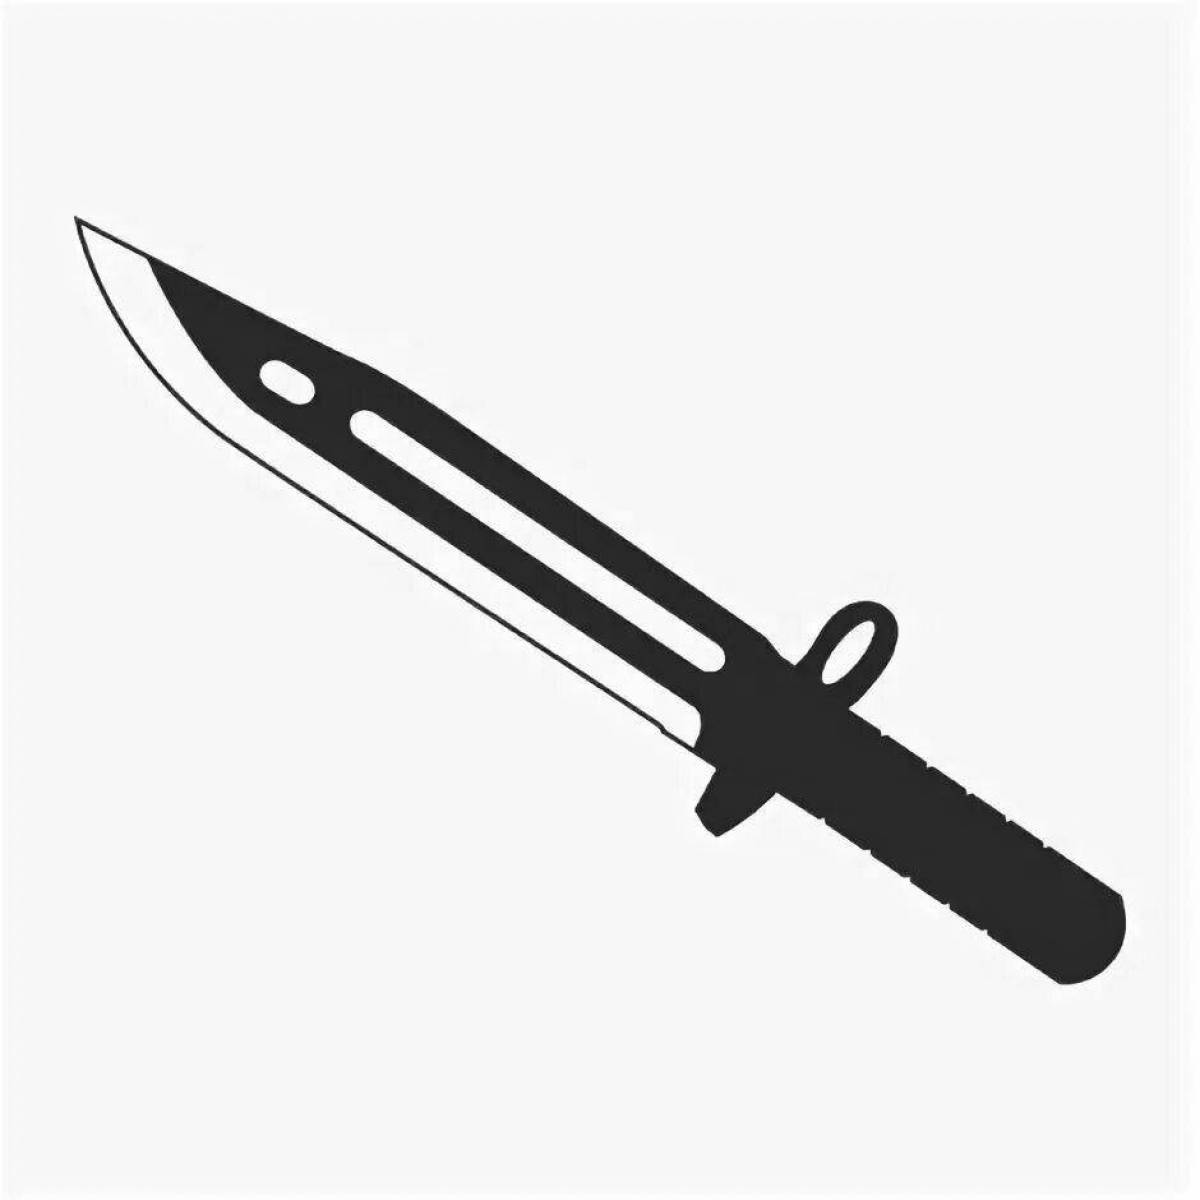 Ножи из standoff рисунок. М9 байонет чёрно белый. СТЕНДОФФ 2 нож м9. М9 нож стандофф 2. Раскраски стандофф 2 ножи м9 байонет.